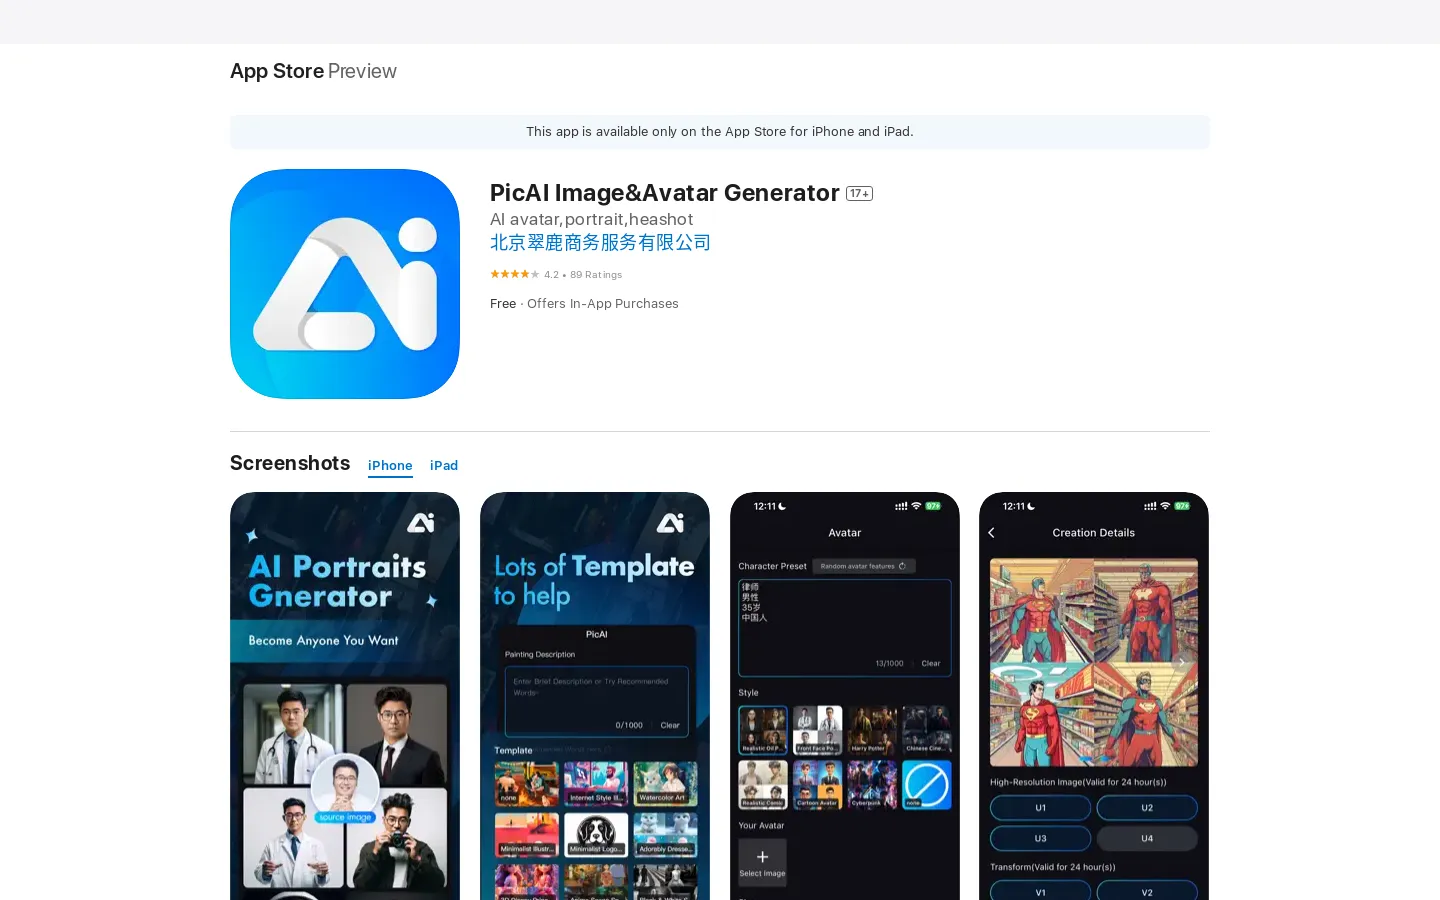 PicAI Image&Avatar Generator on the App Store